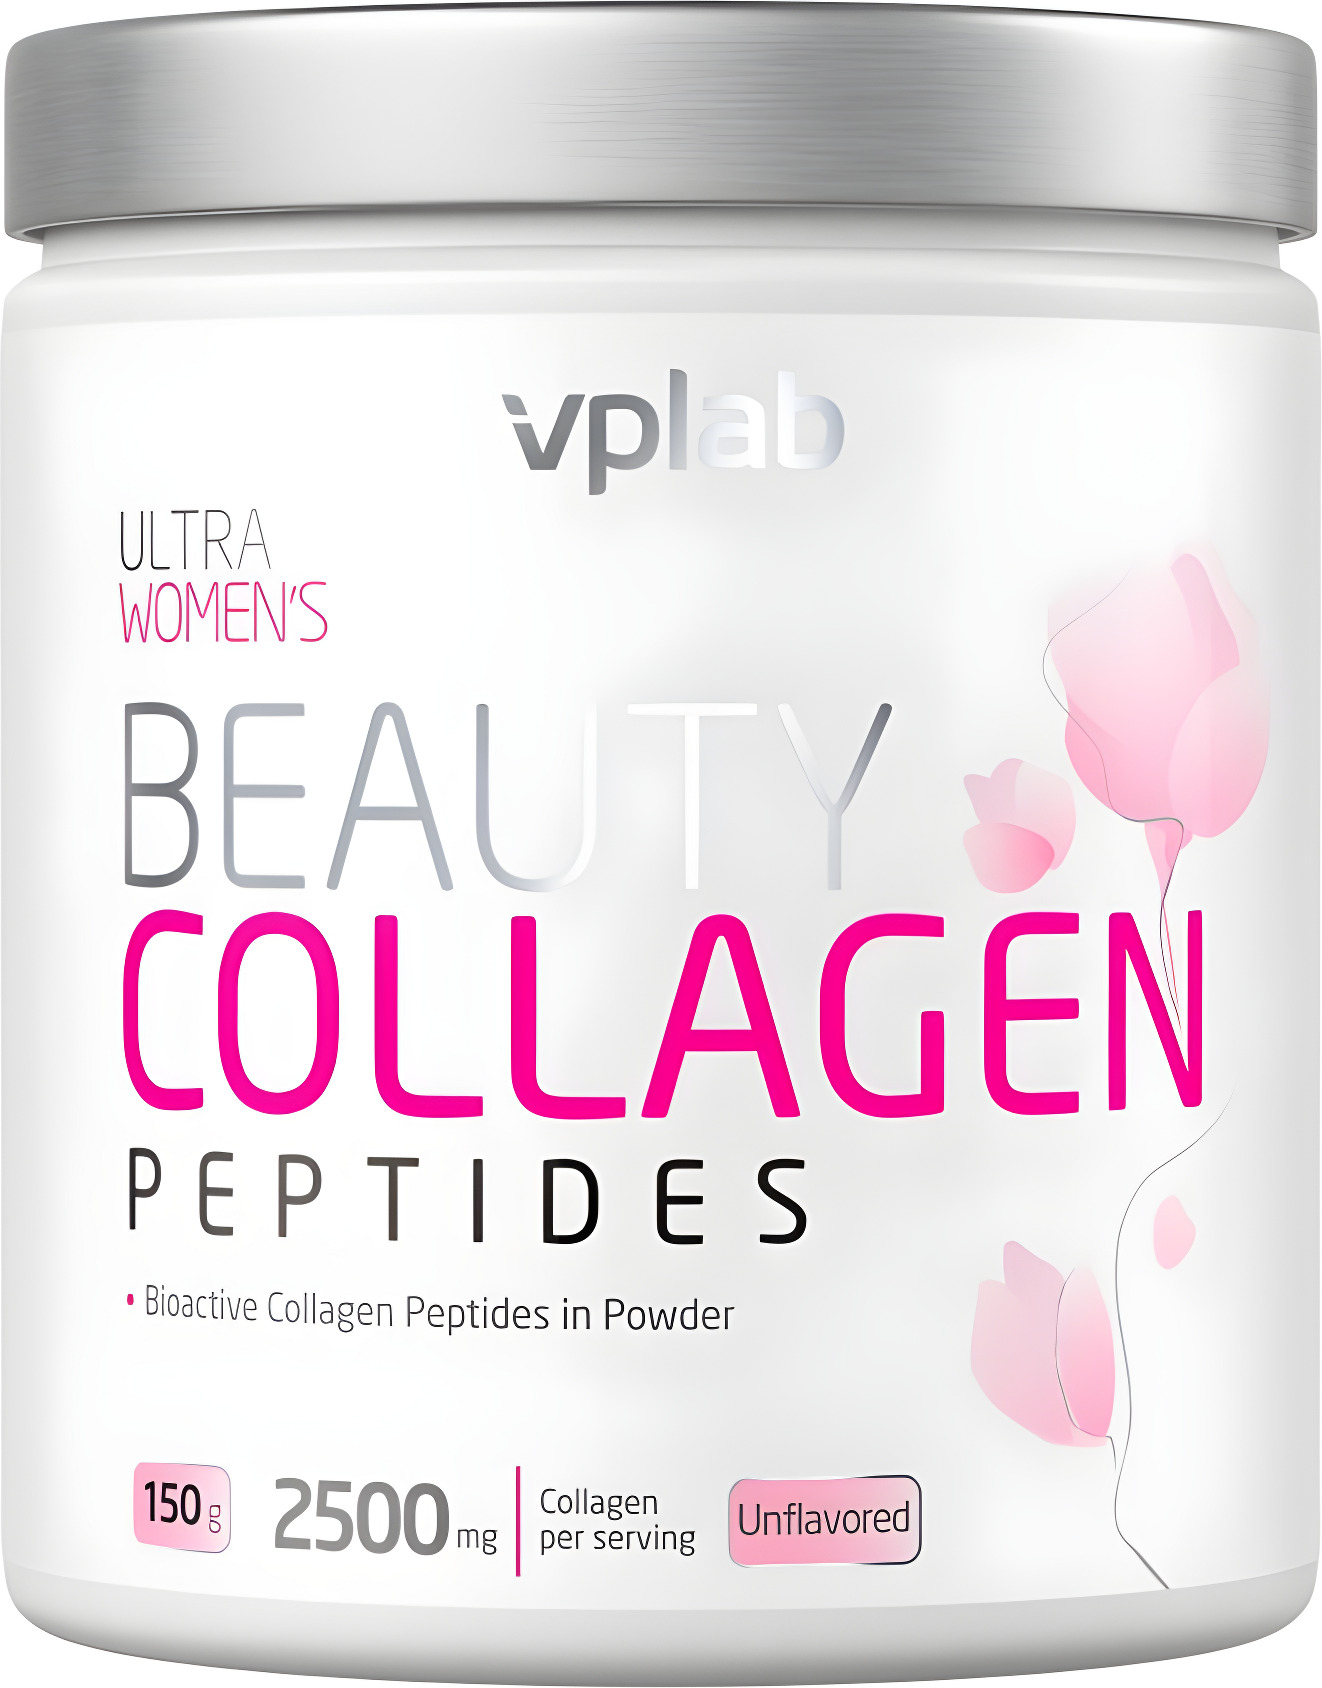 Коллаген что это такое простыми. ВПЛАБ коллаген для женщин Бьюти 2500мг. Коллаген VPLAB / Beauty Collagen Peptides / 150 g. Коллаген VPLAB Collagen Peptides. ВПЛАБ Бьюти коллаген пептиды VPLAB Beauty Collagen Peptides.